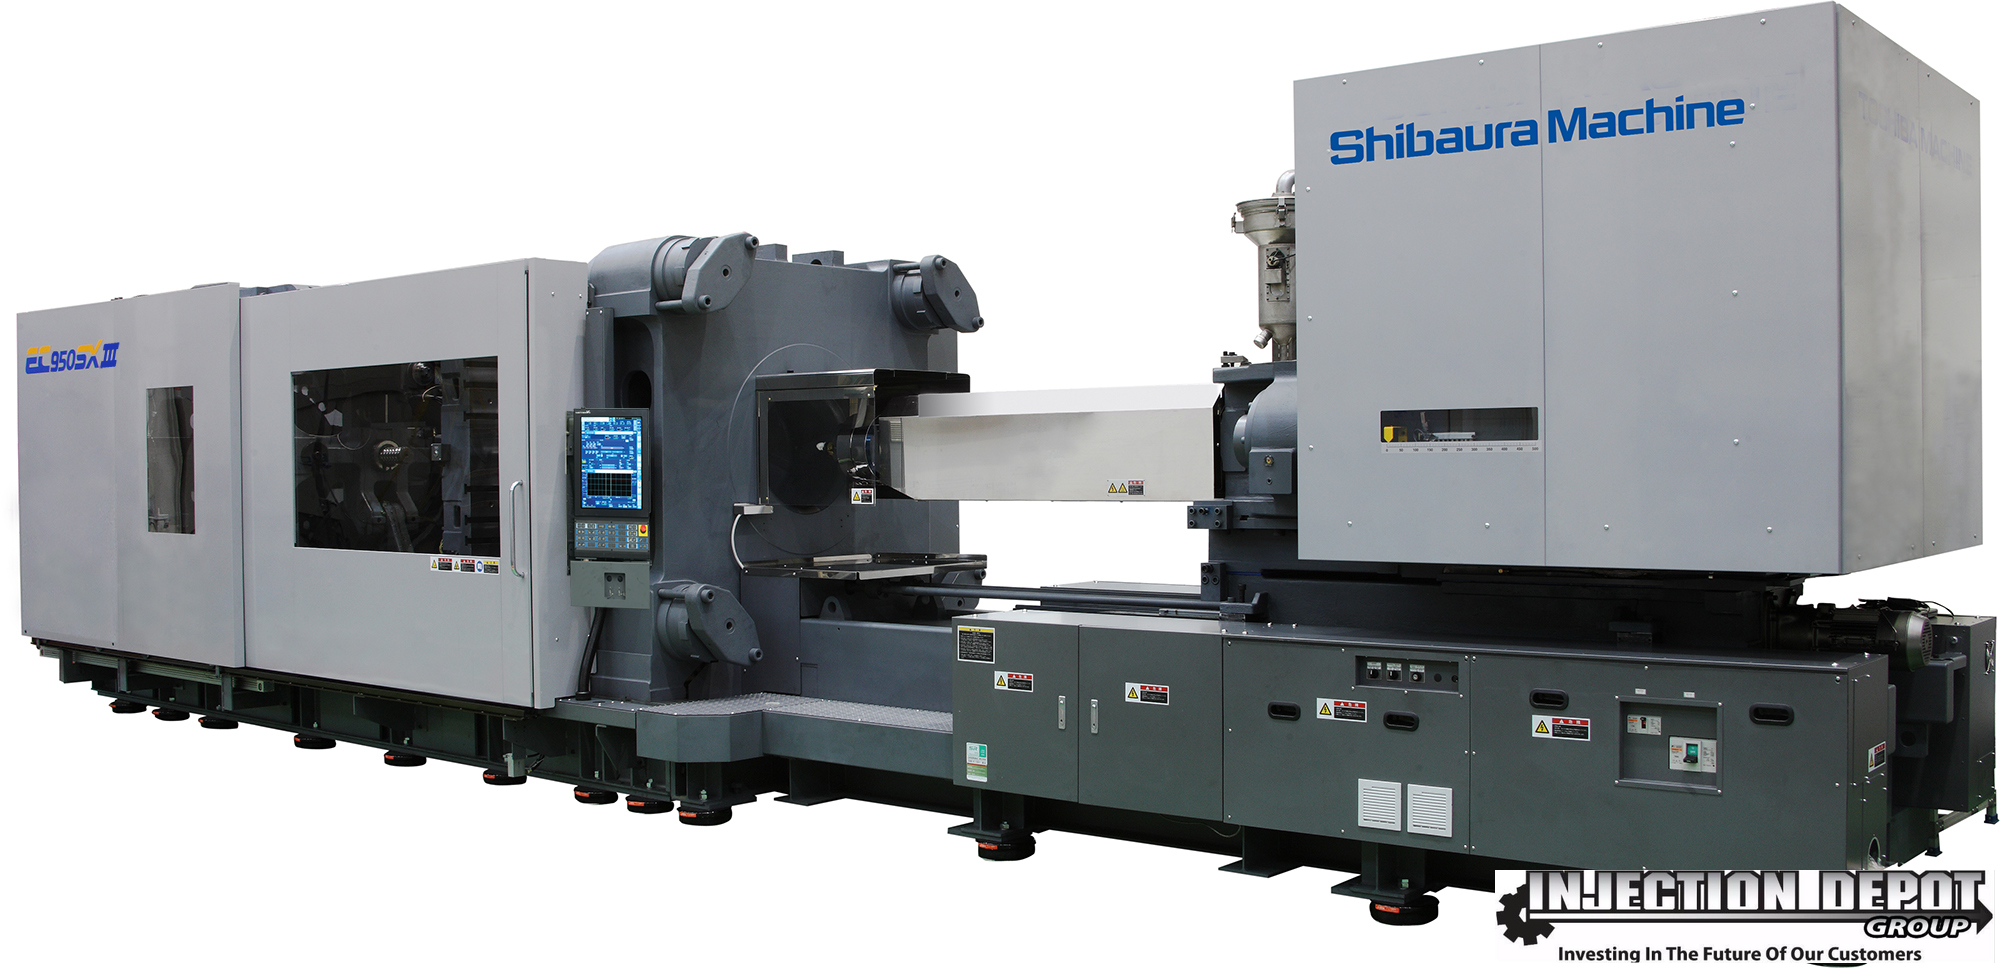 SHIBAURA MACHINE Shibaura Machine EC950SXIIIV70-i61 B Horizontal Injection Moulding Machines | INJECTION DEPOT GROUP